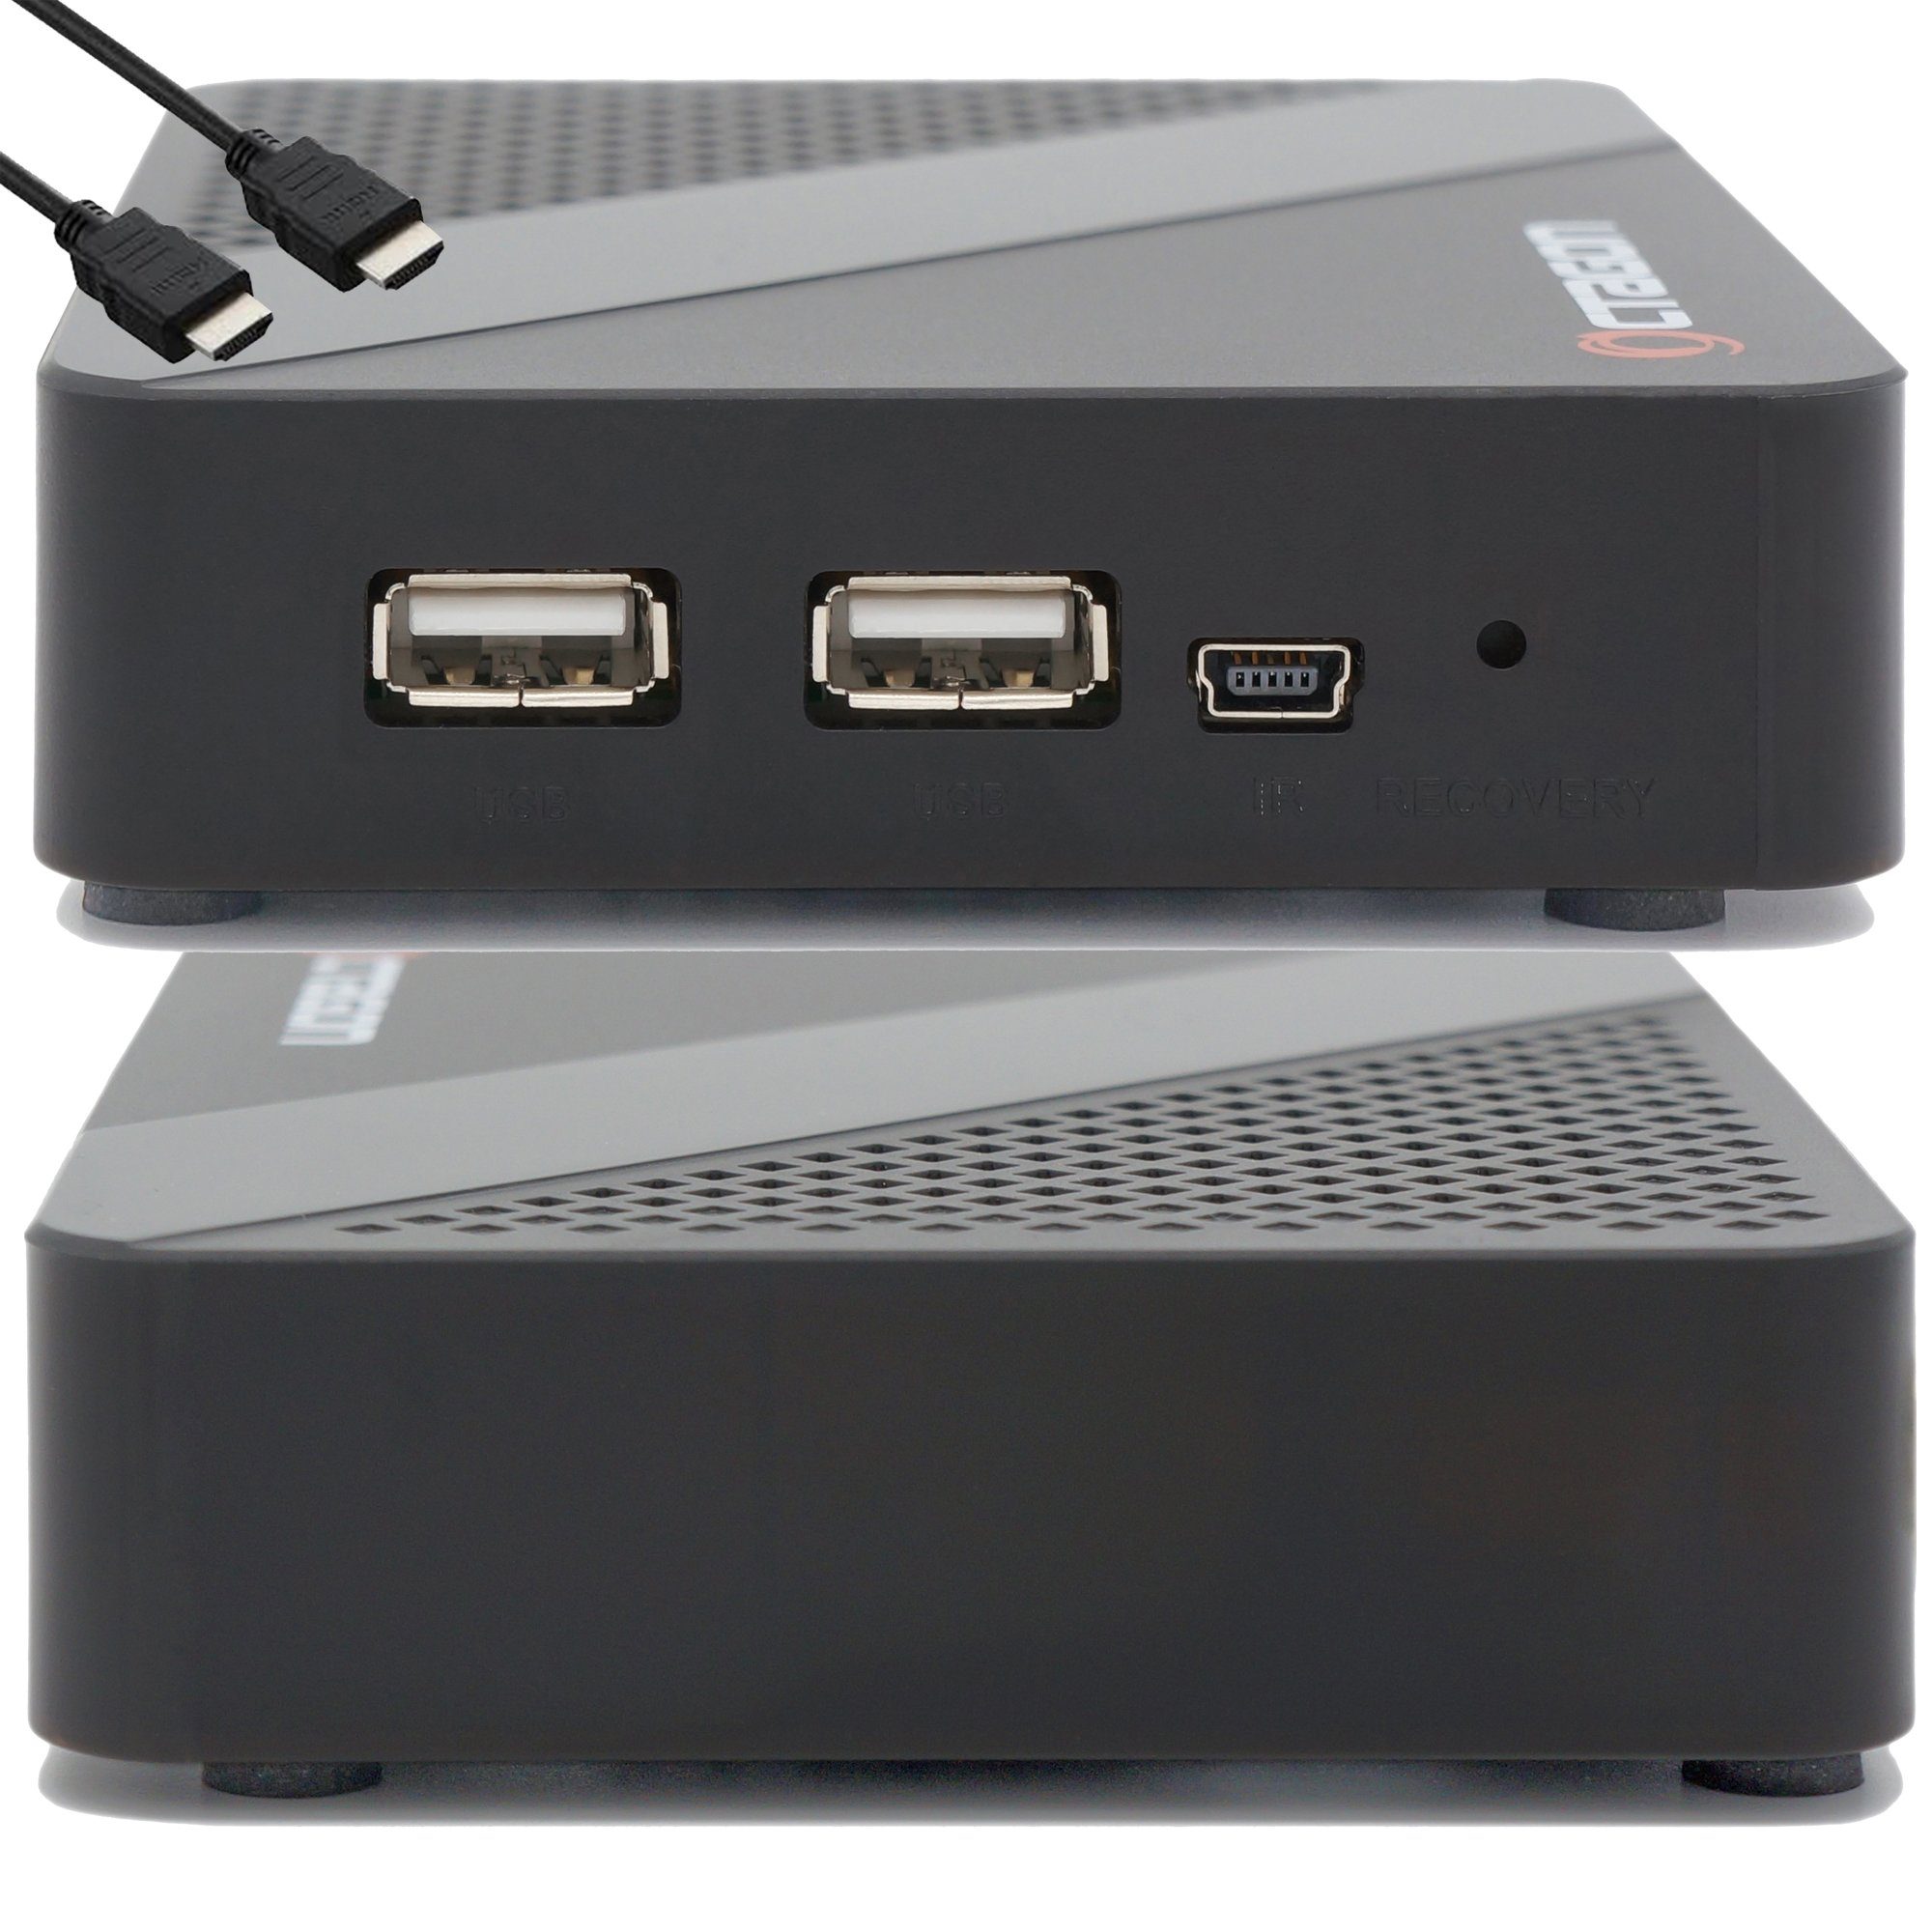 IP HEVC IPTV Smart OCTAGON HD H.265 Box Streaming-Box SX887